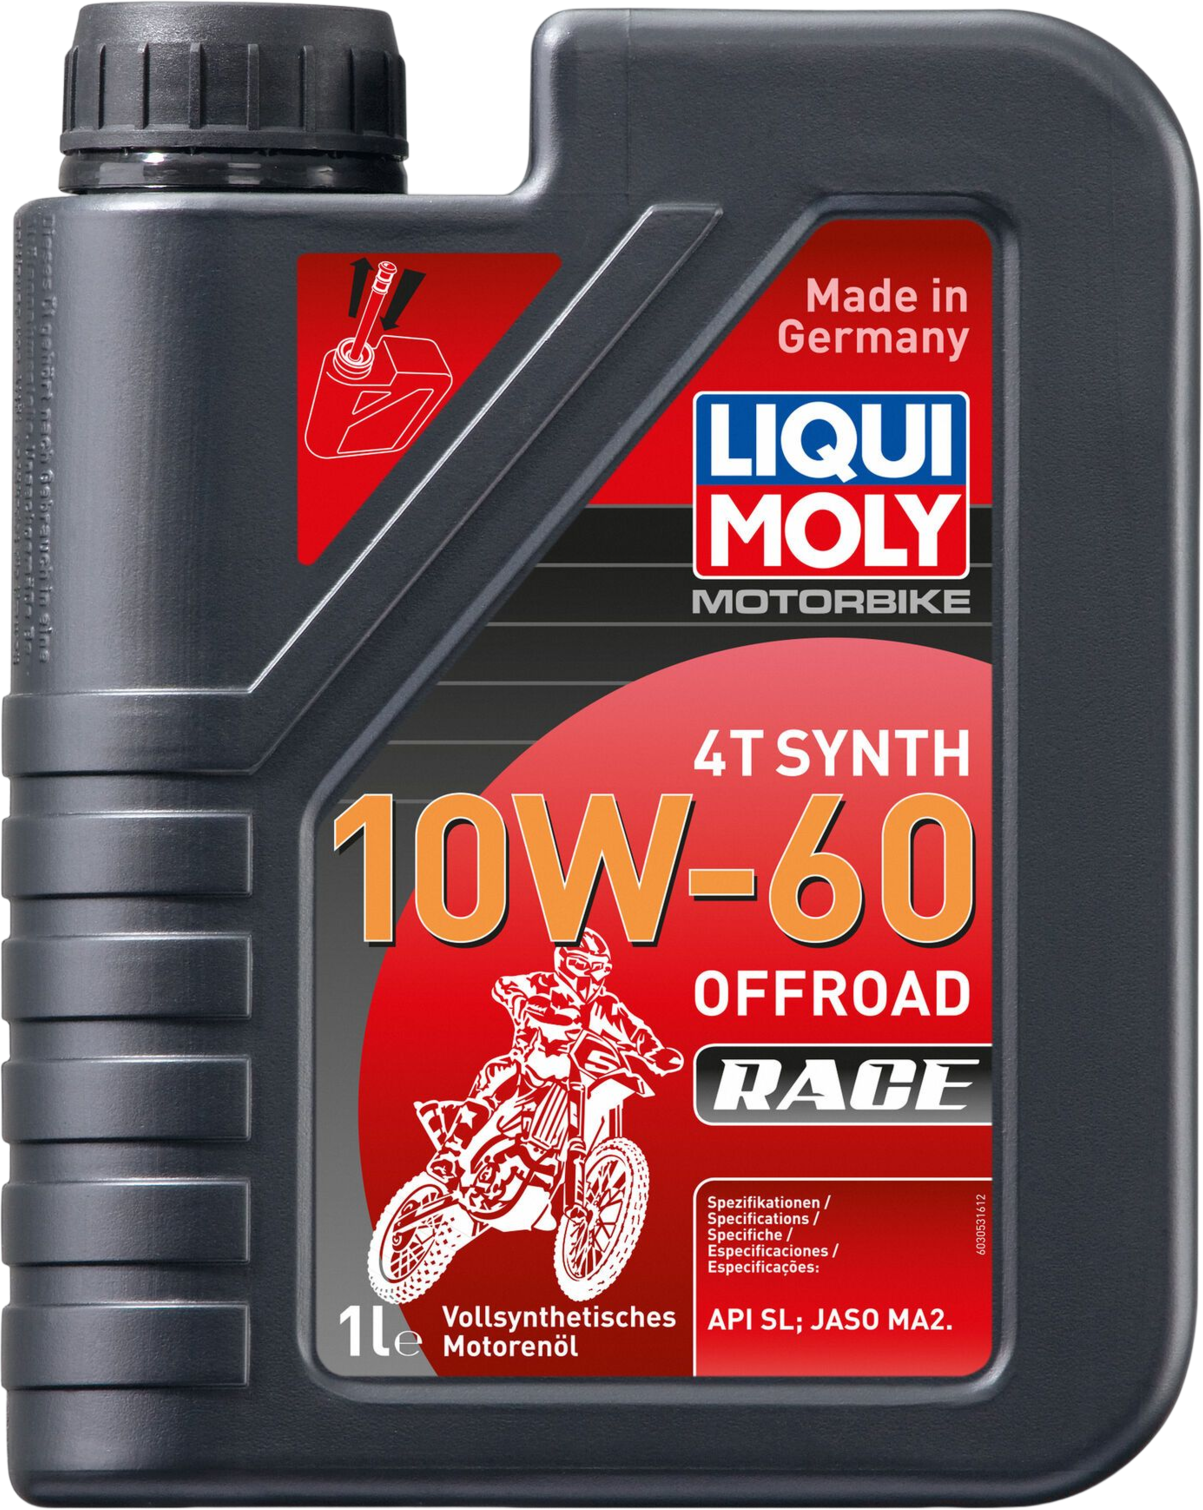 Liqui Moly Motorbike 4T Synth 10W-60 Offroad Race, 1 lt